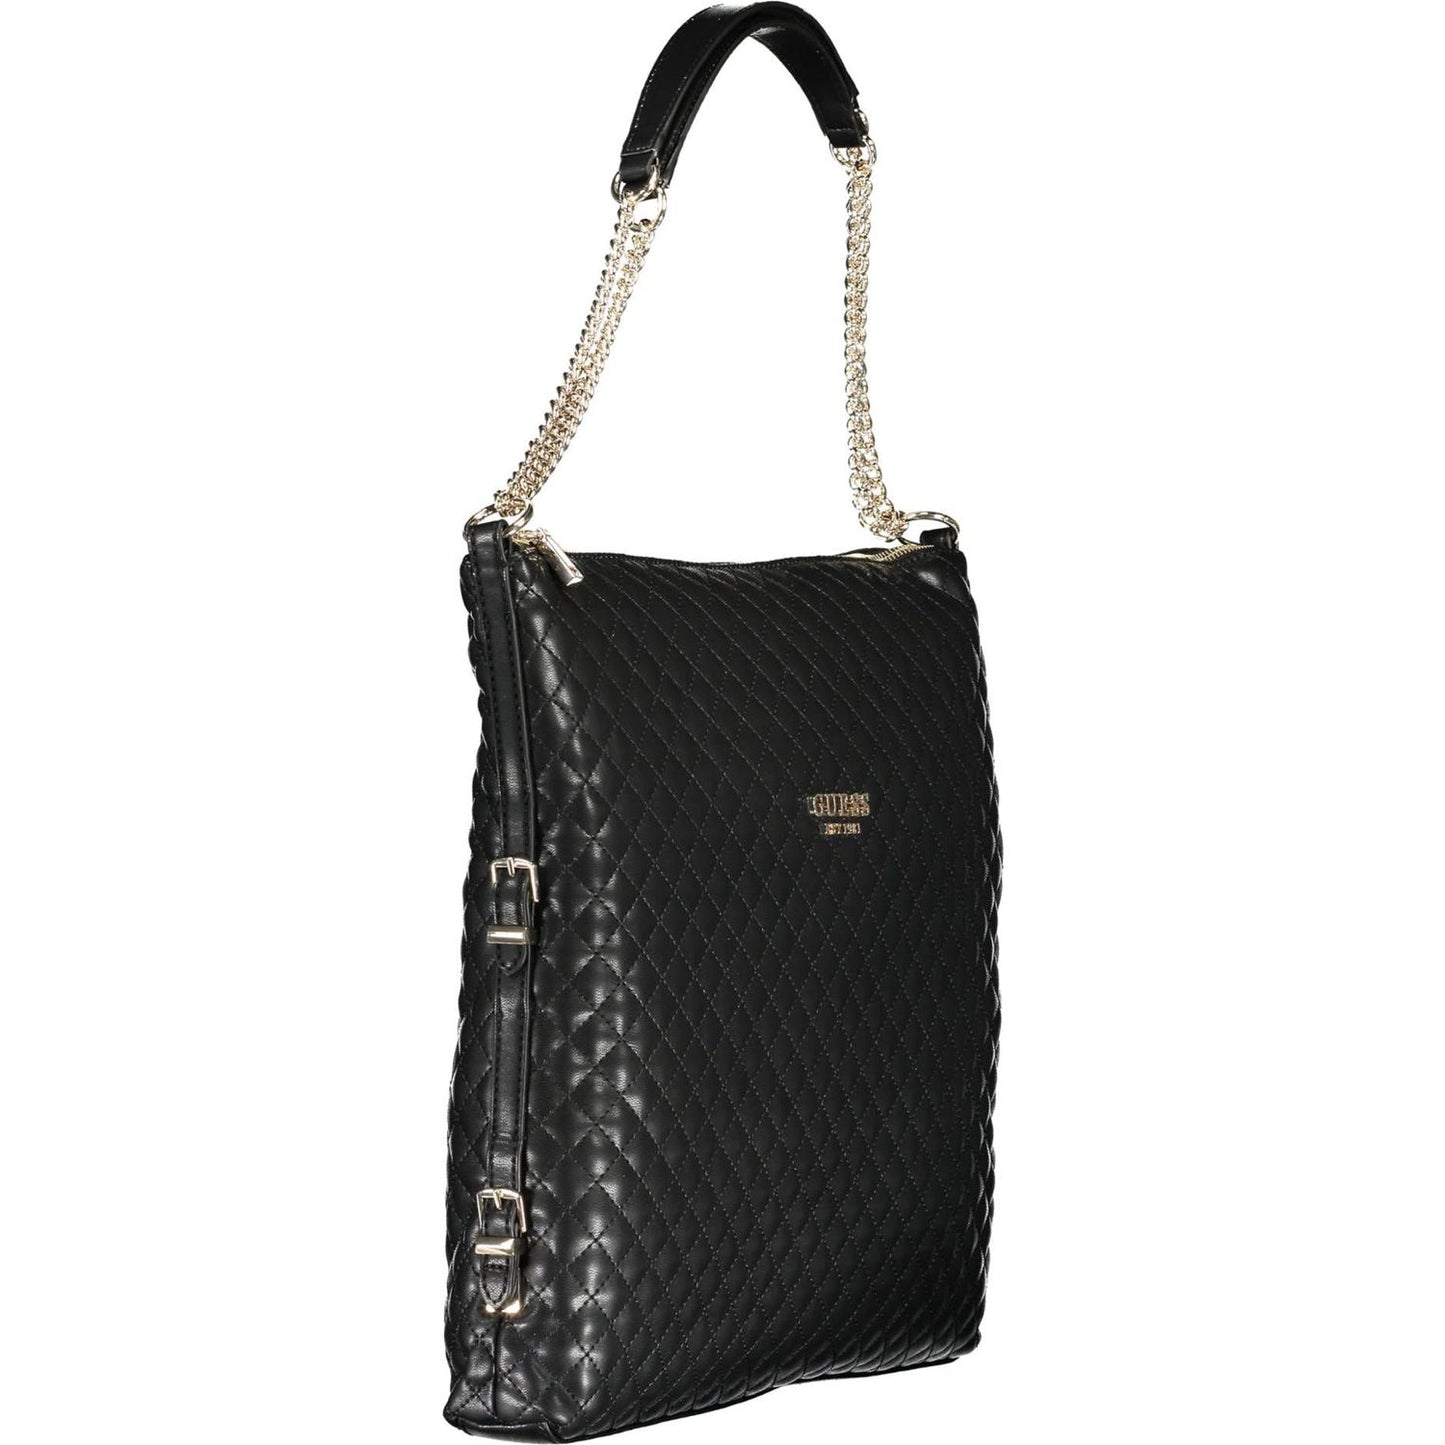 Chic Two-Chain Black Shoulder Bag